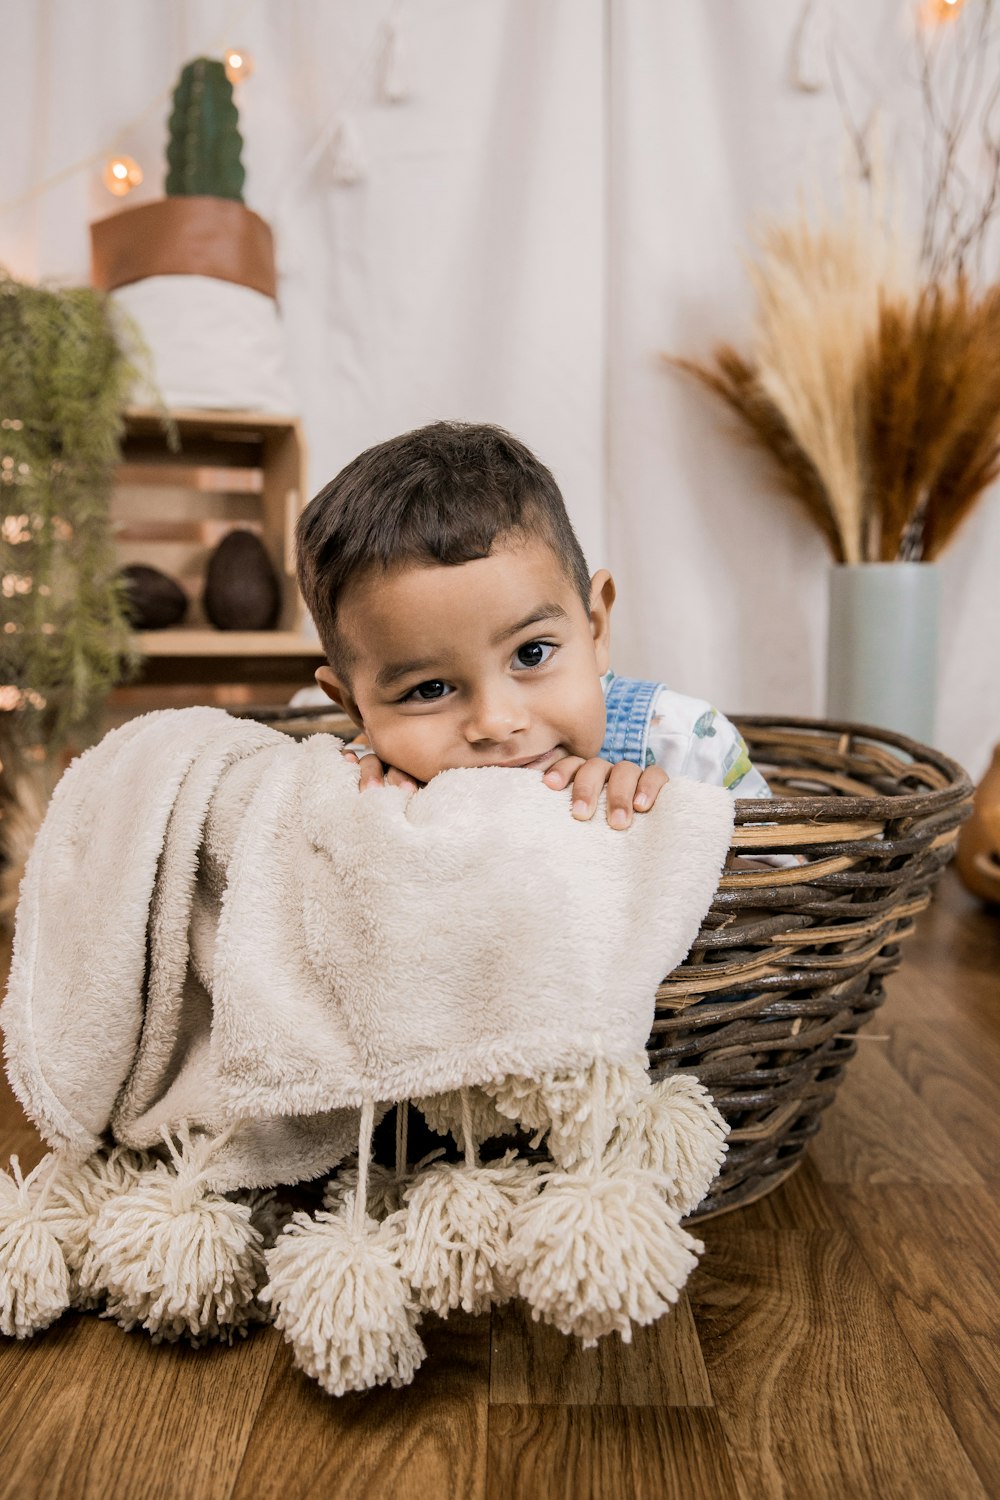 boy in white bath towel sitting on woven basket